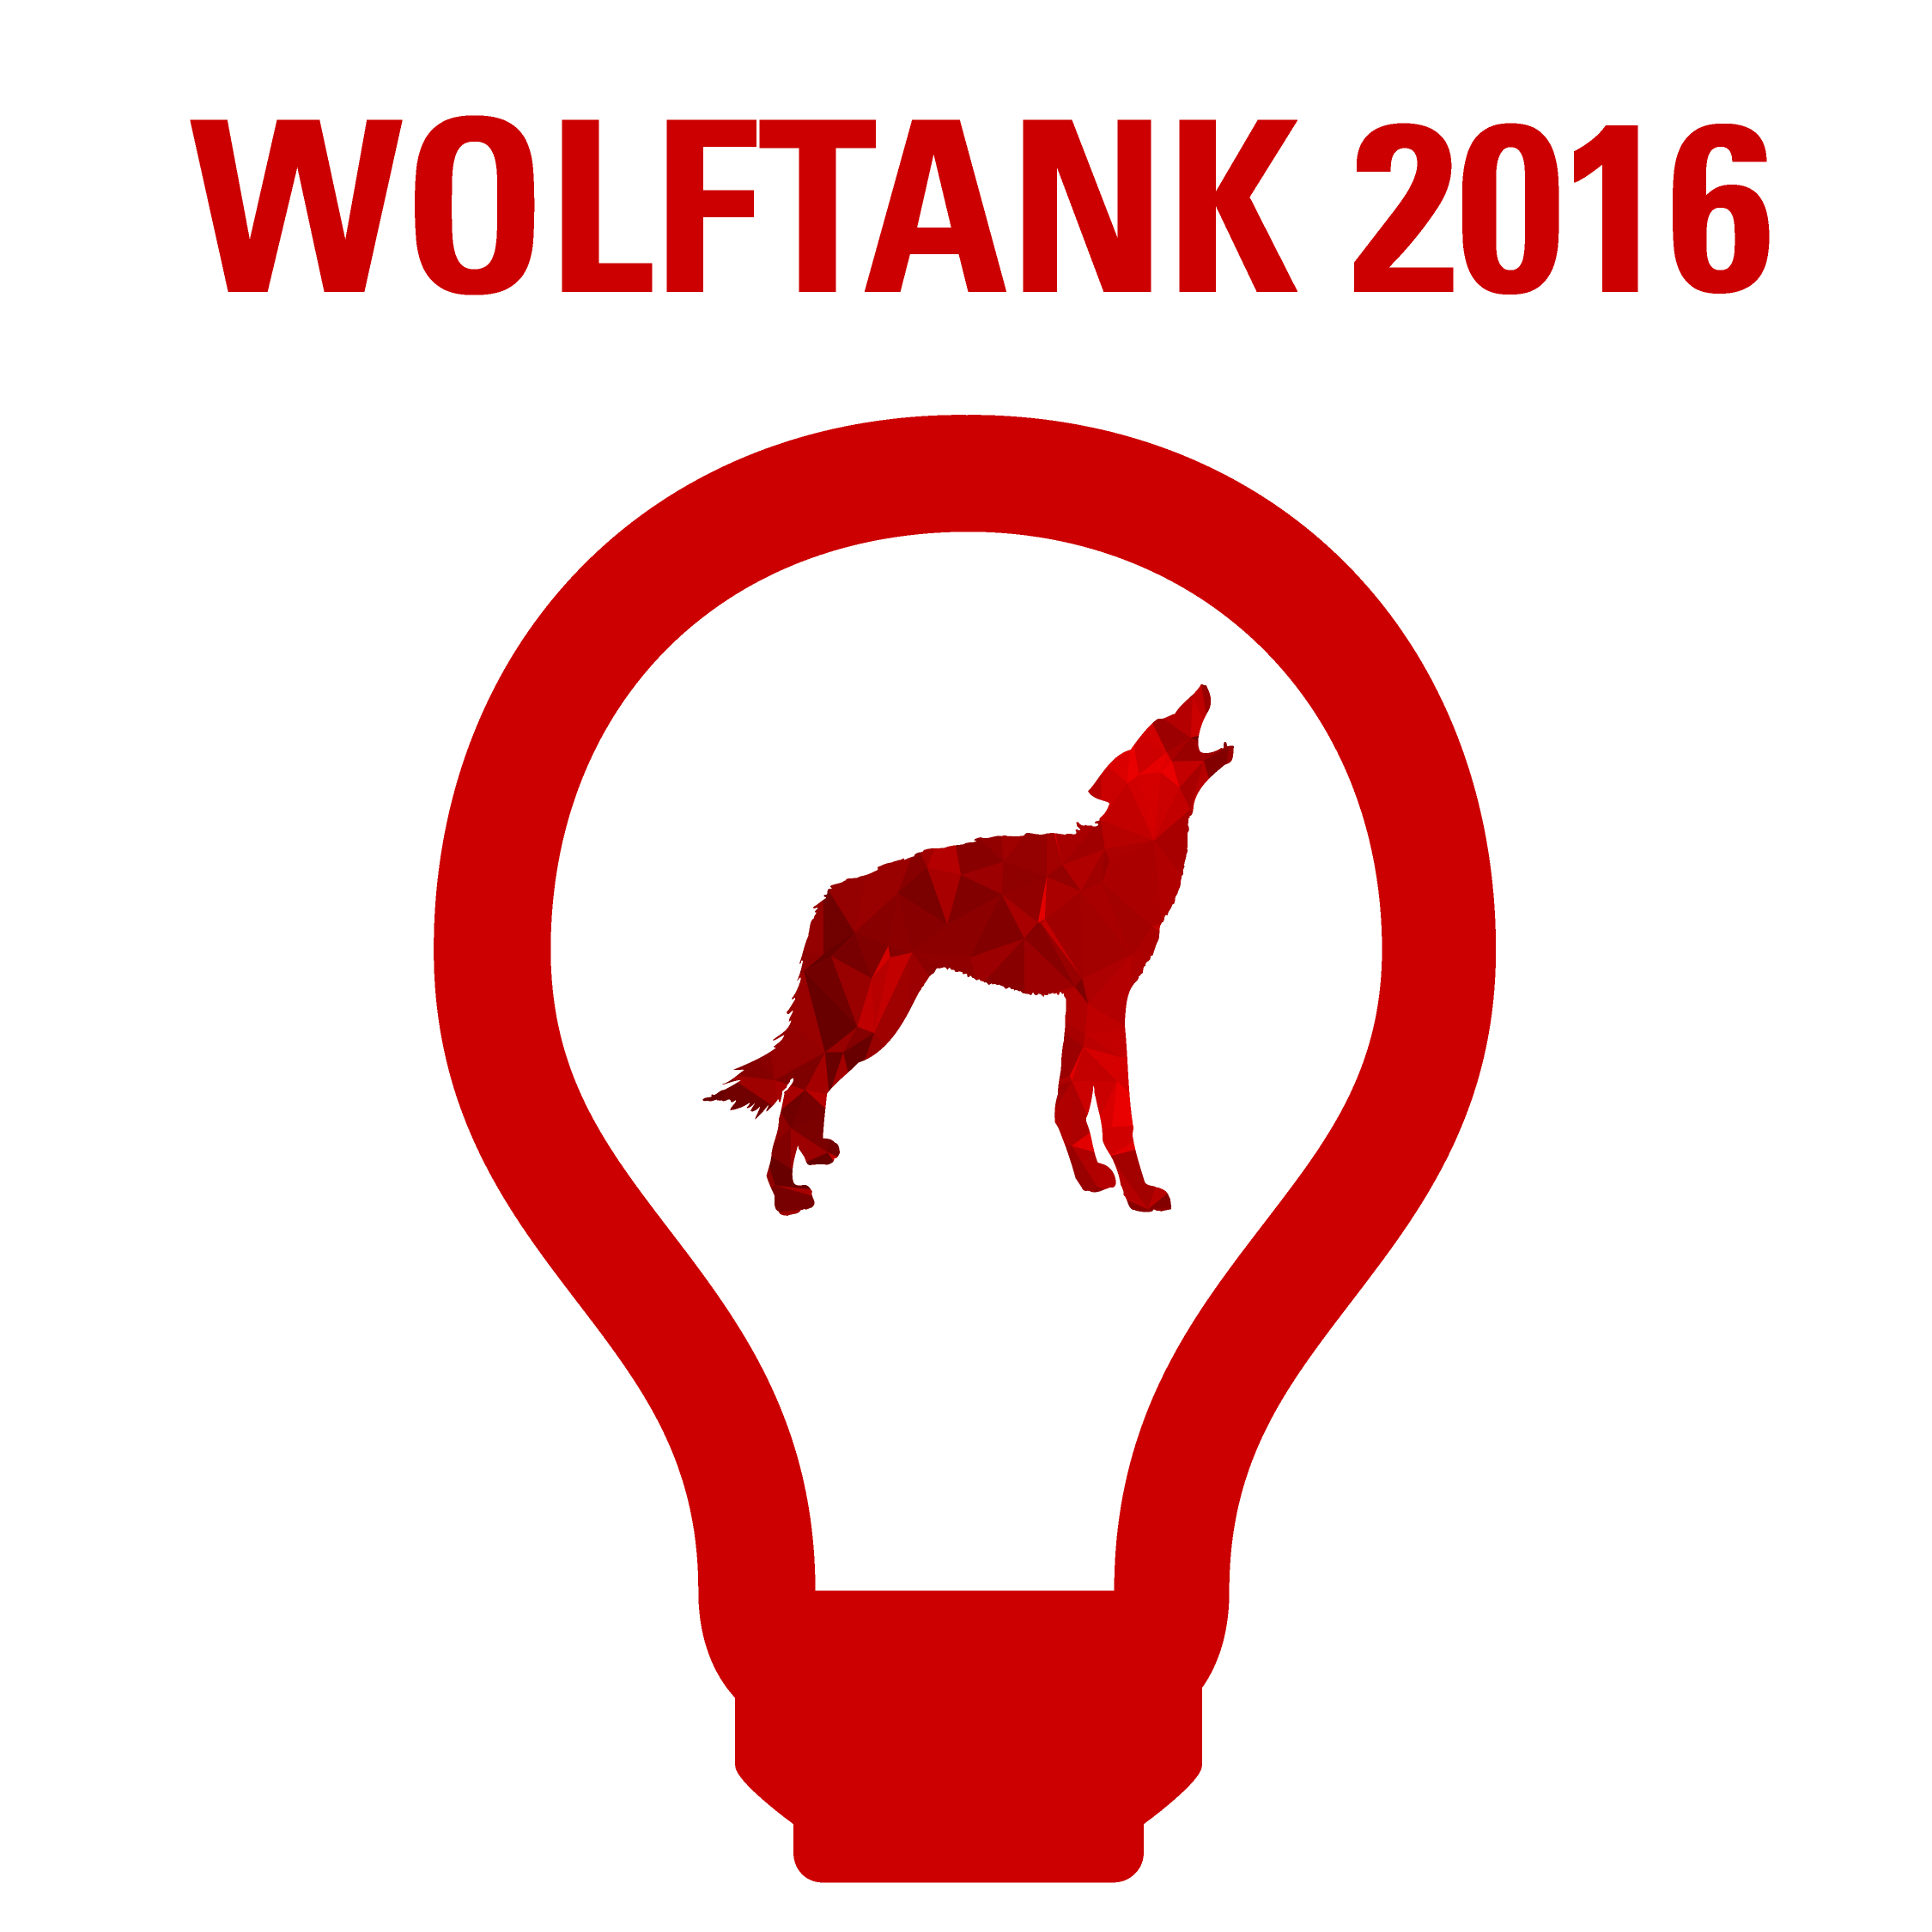 WolfTank 2016 logo